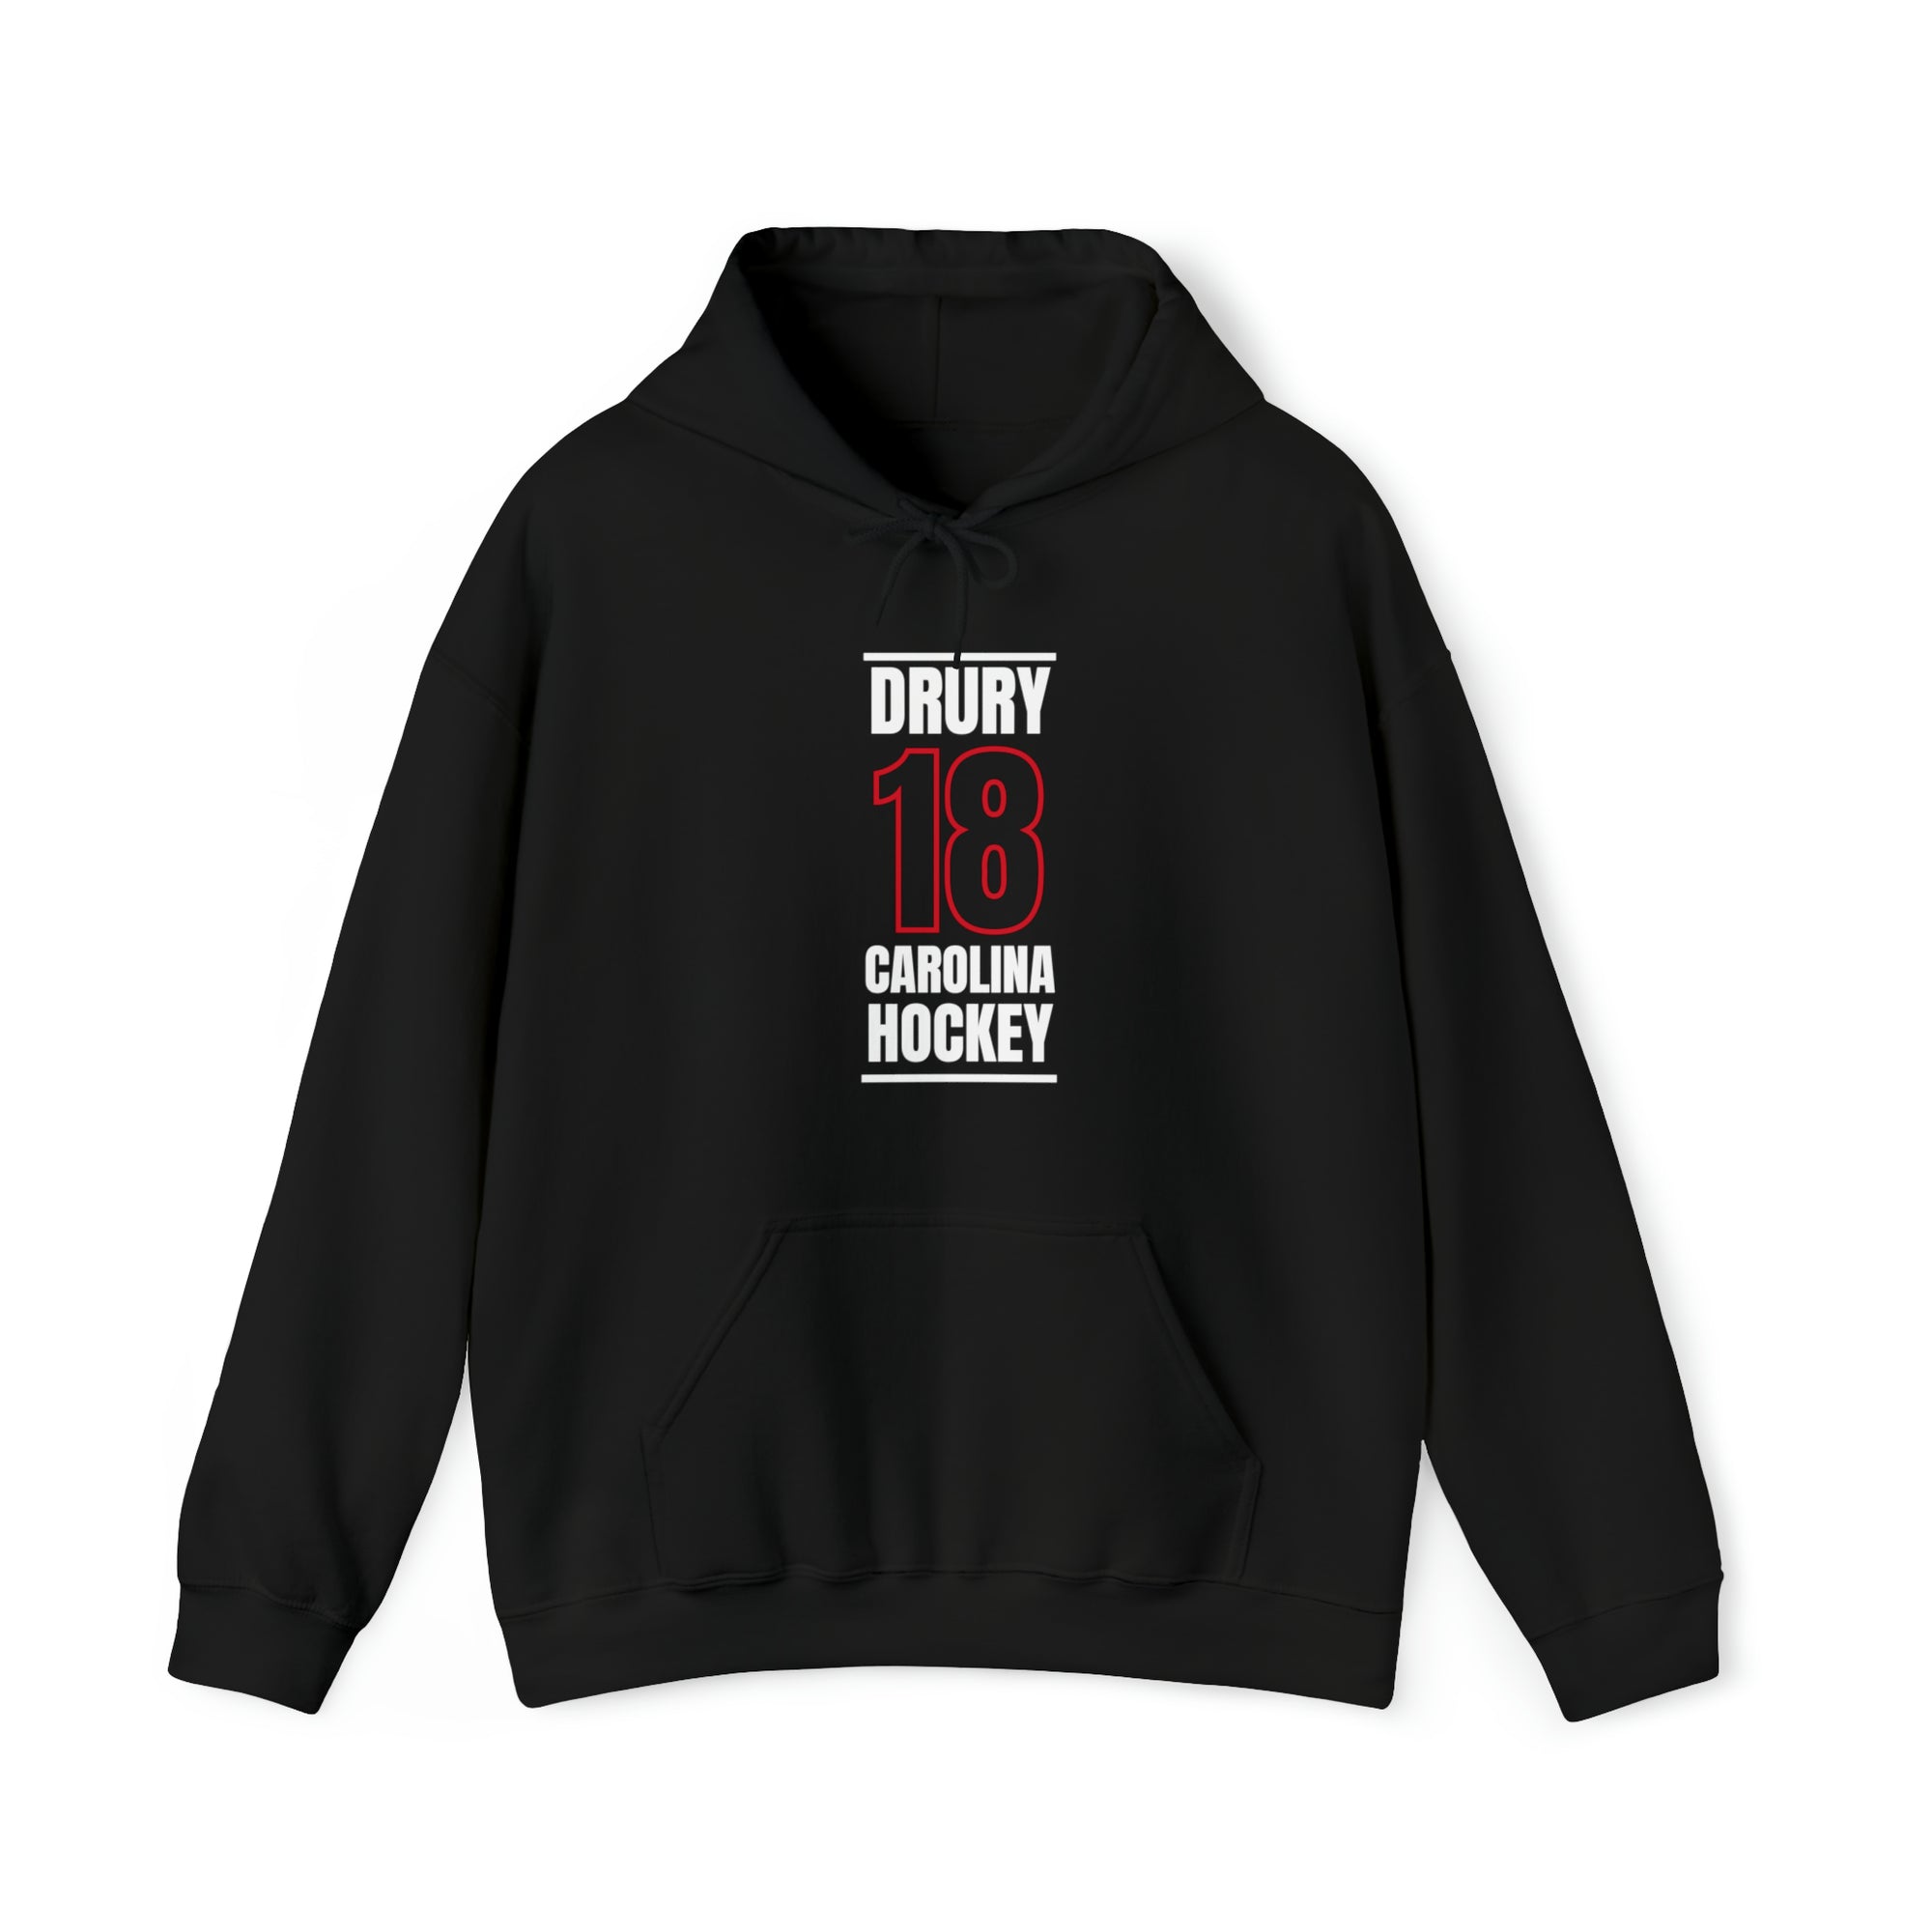 Drury 18 Carolina Hockey Black Vertical Design Unisex Hooded Sweatshirt